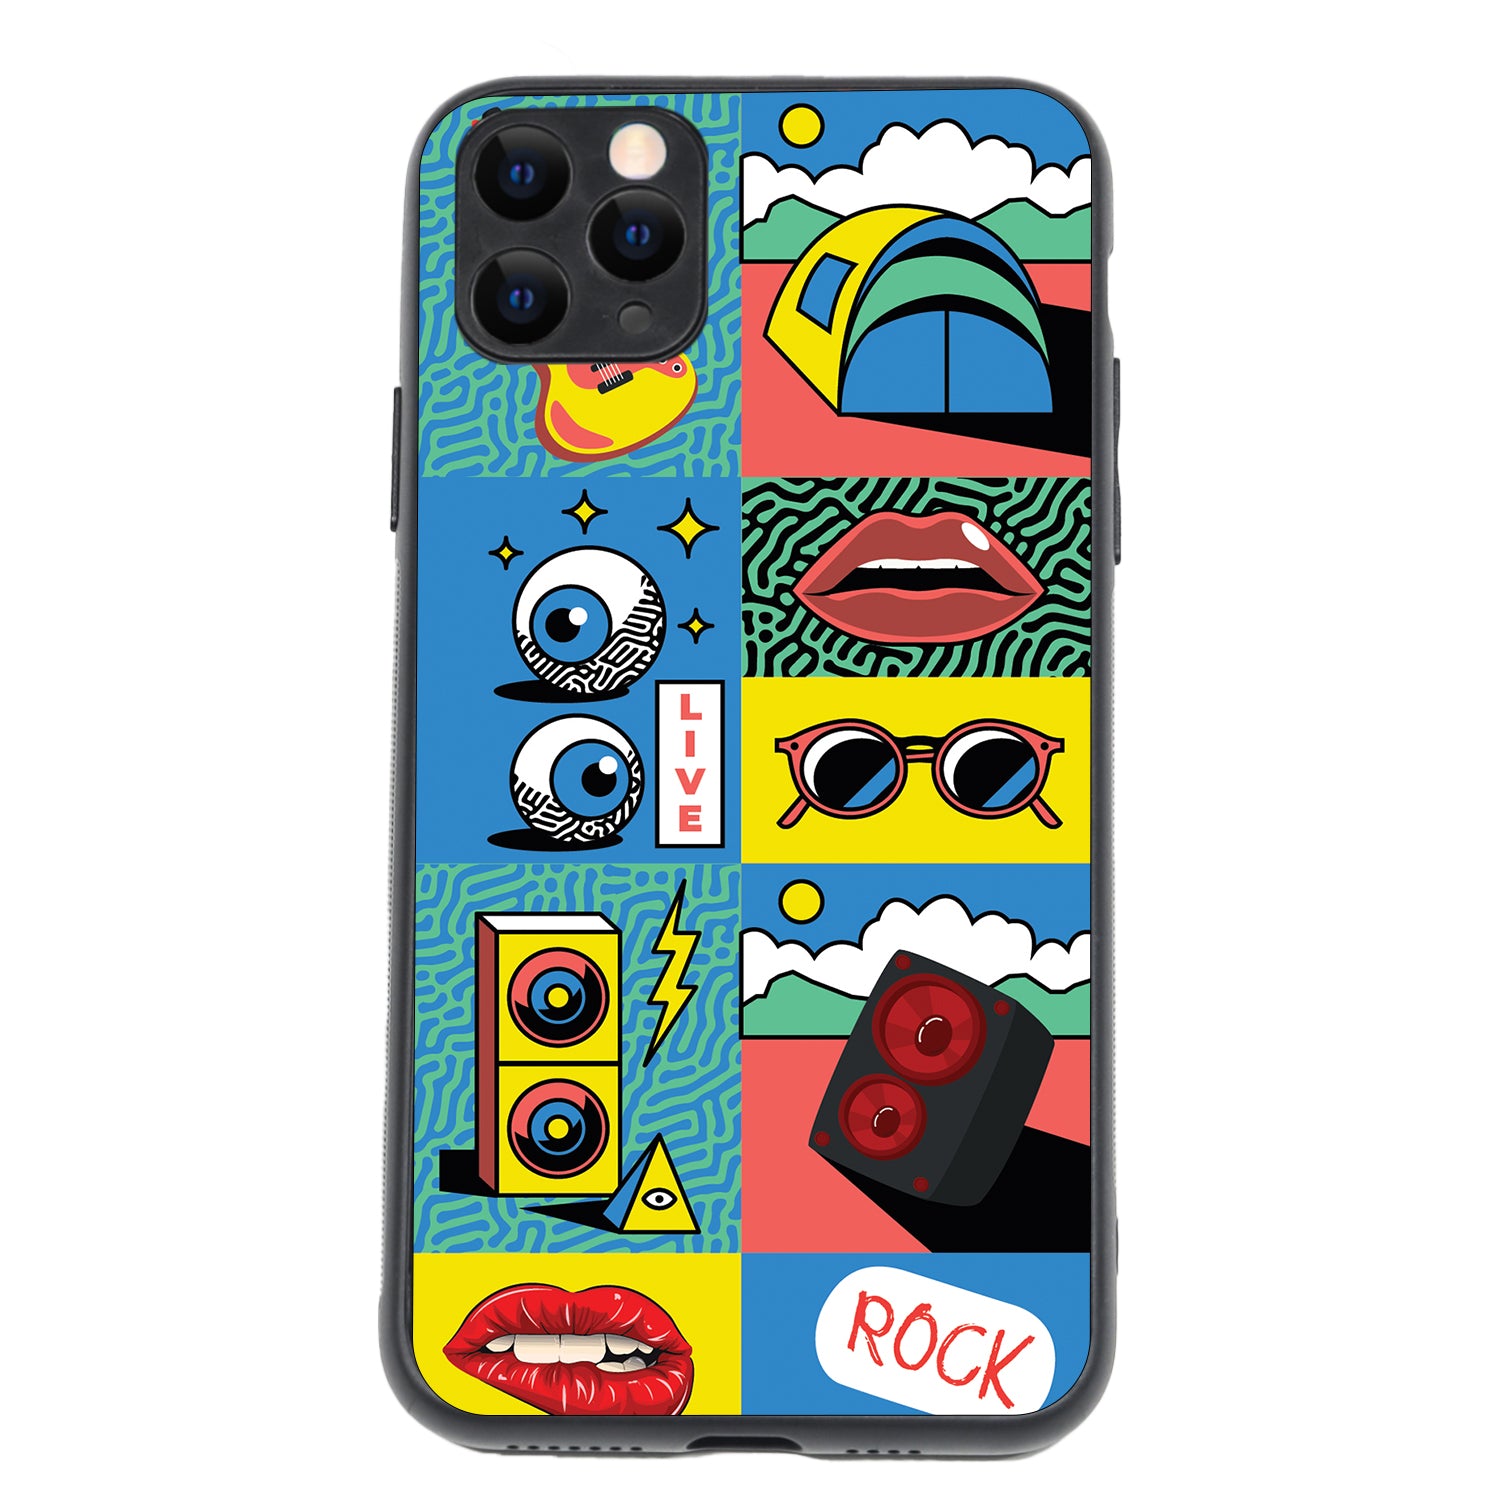 Live Rock Music iPhone 11 Pro Max Case